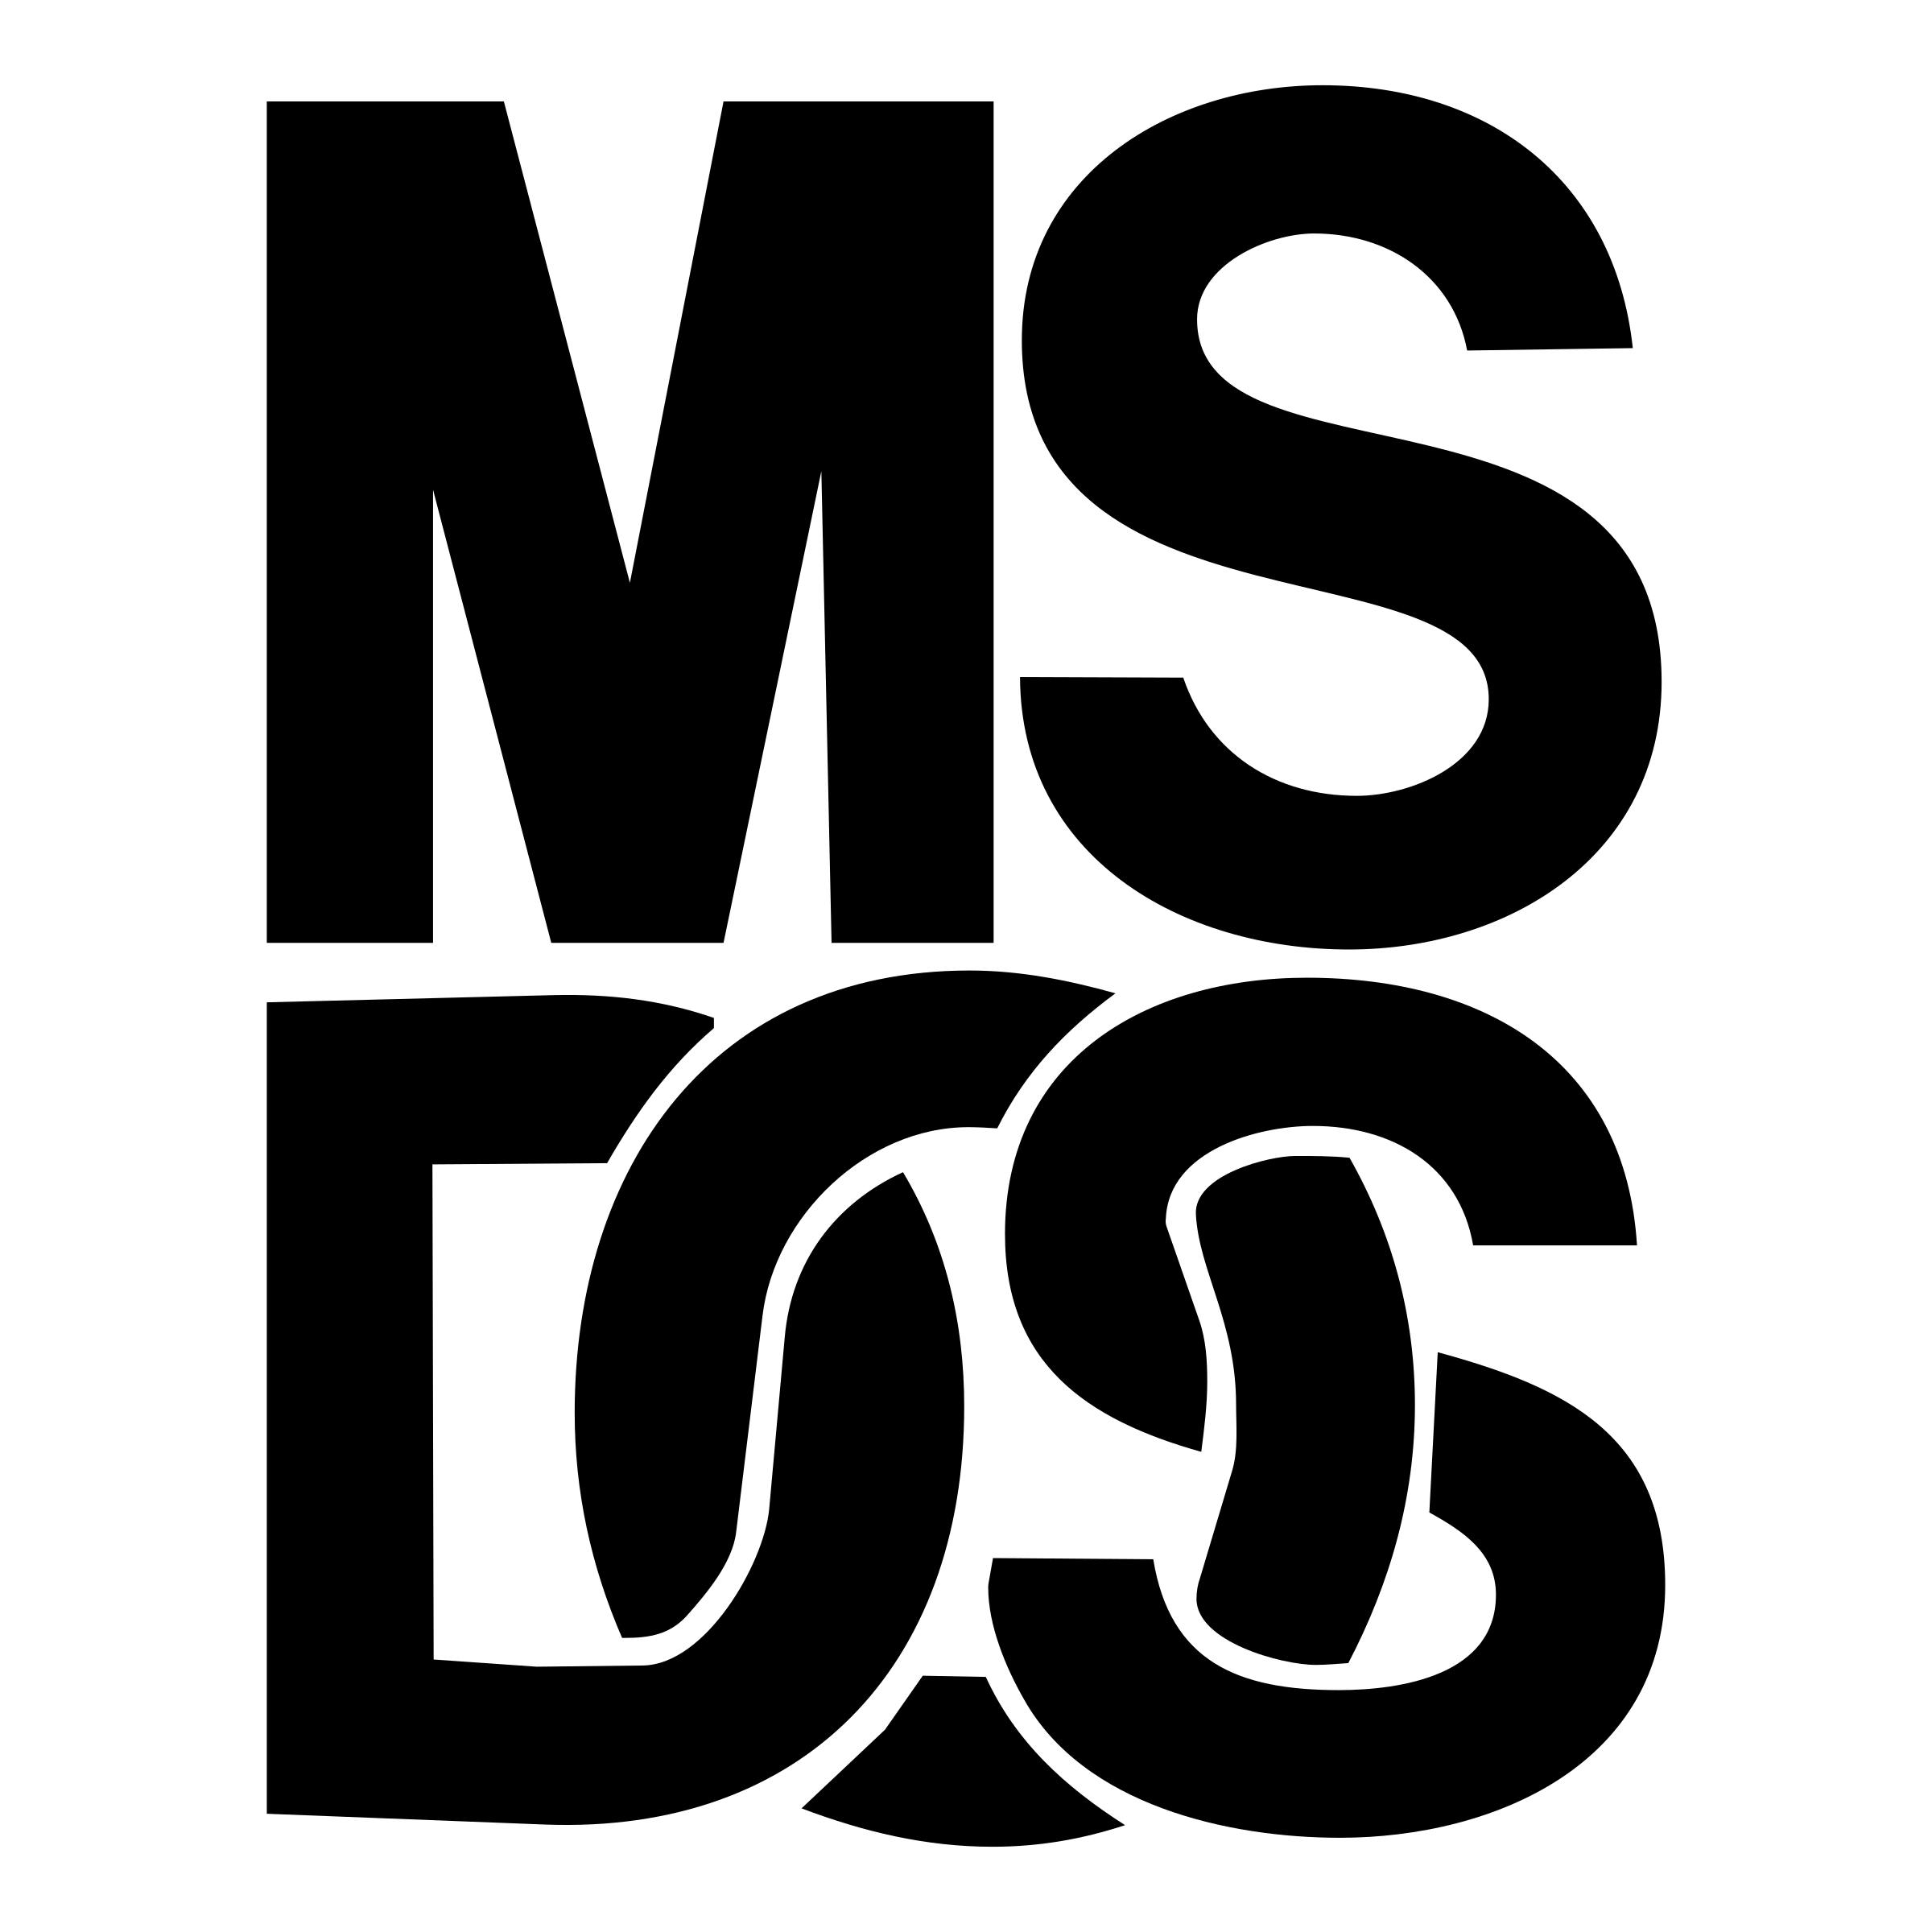 MS-DOS Logo - MS DOS Logo PNG Transparent & SVG Vector